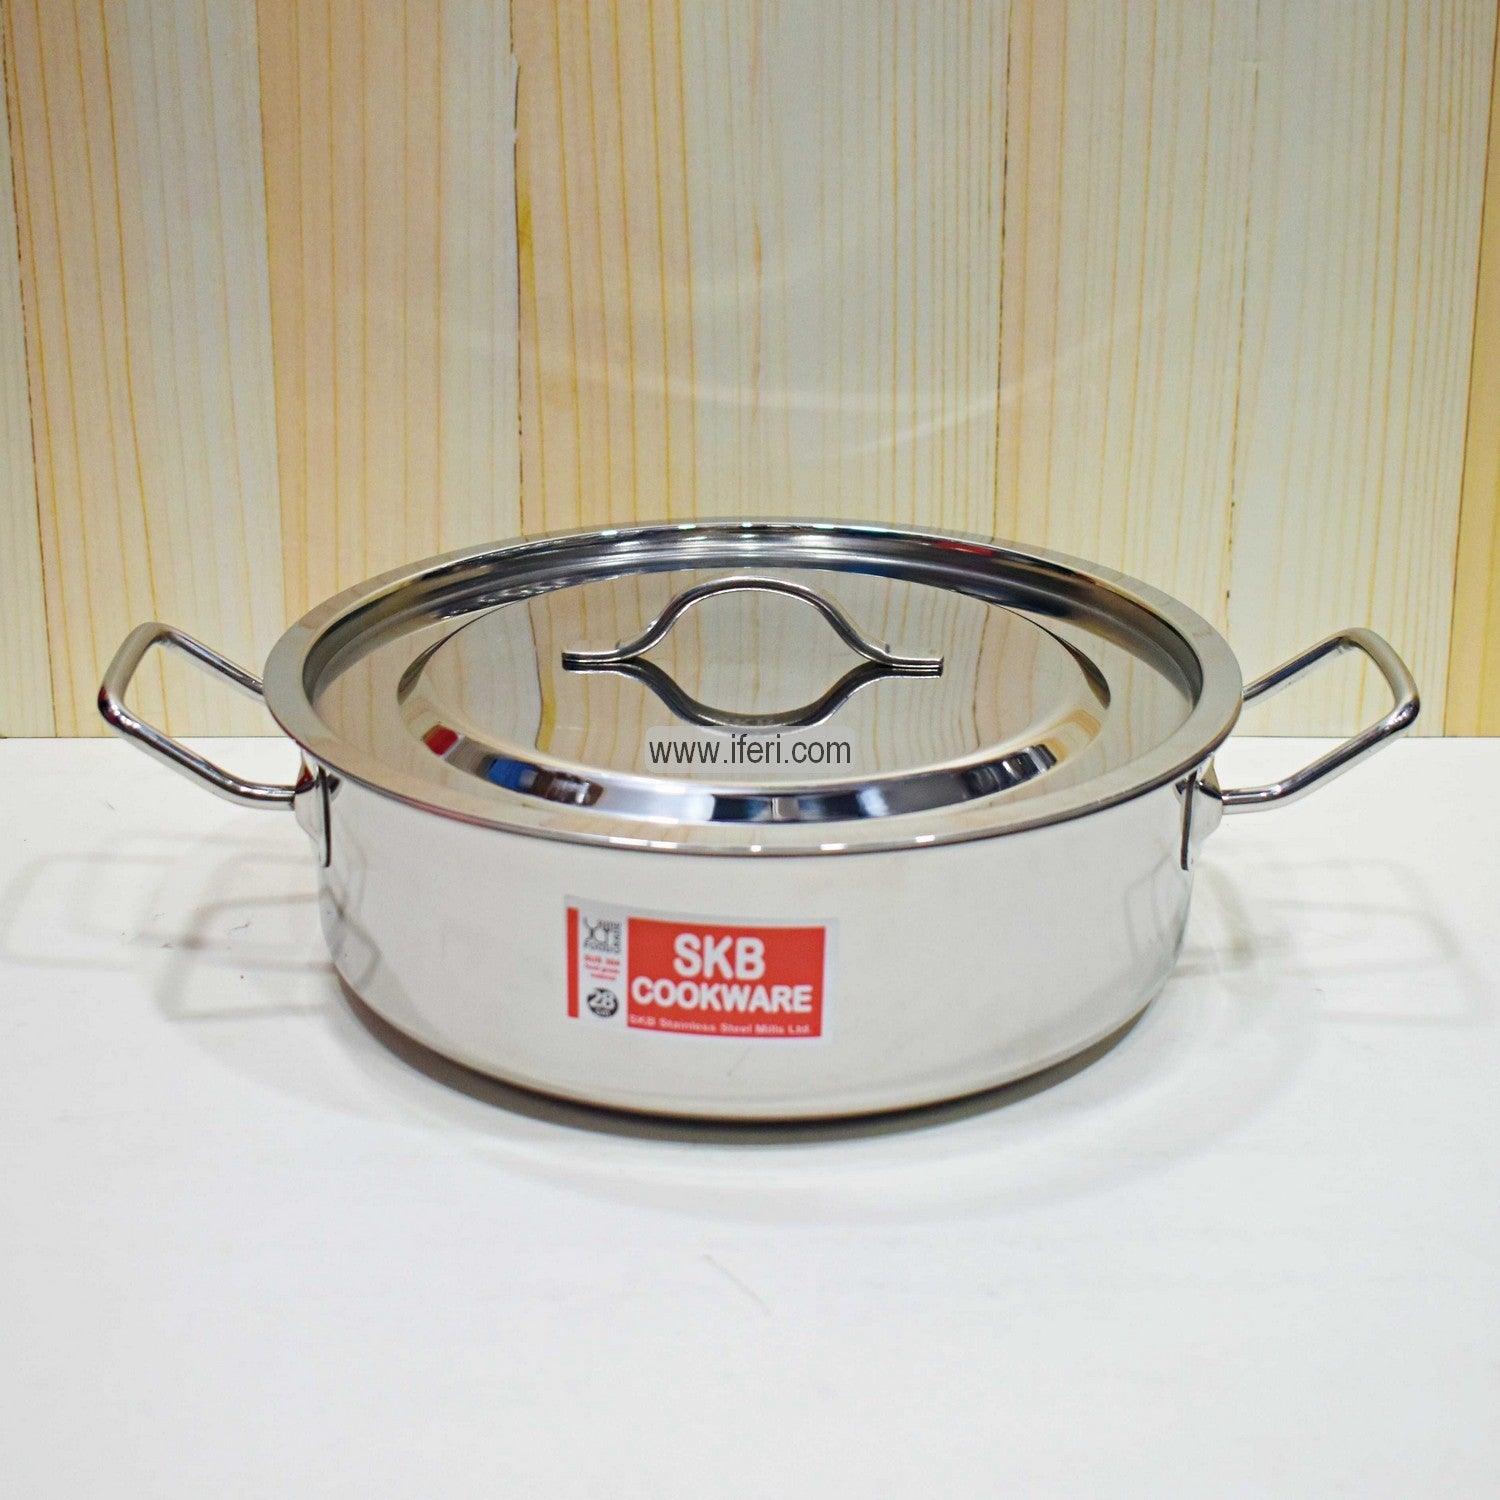 28 cm SKB Stainless Steel Saucepan SN0704-2 Price in Bangladesh - iferi.com